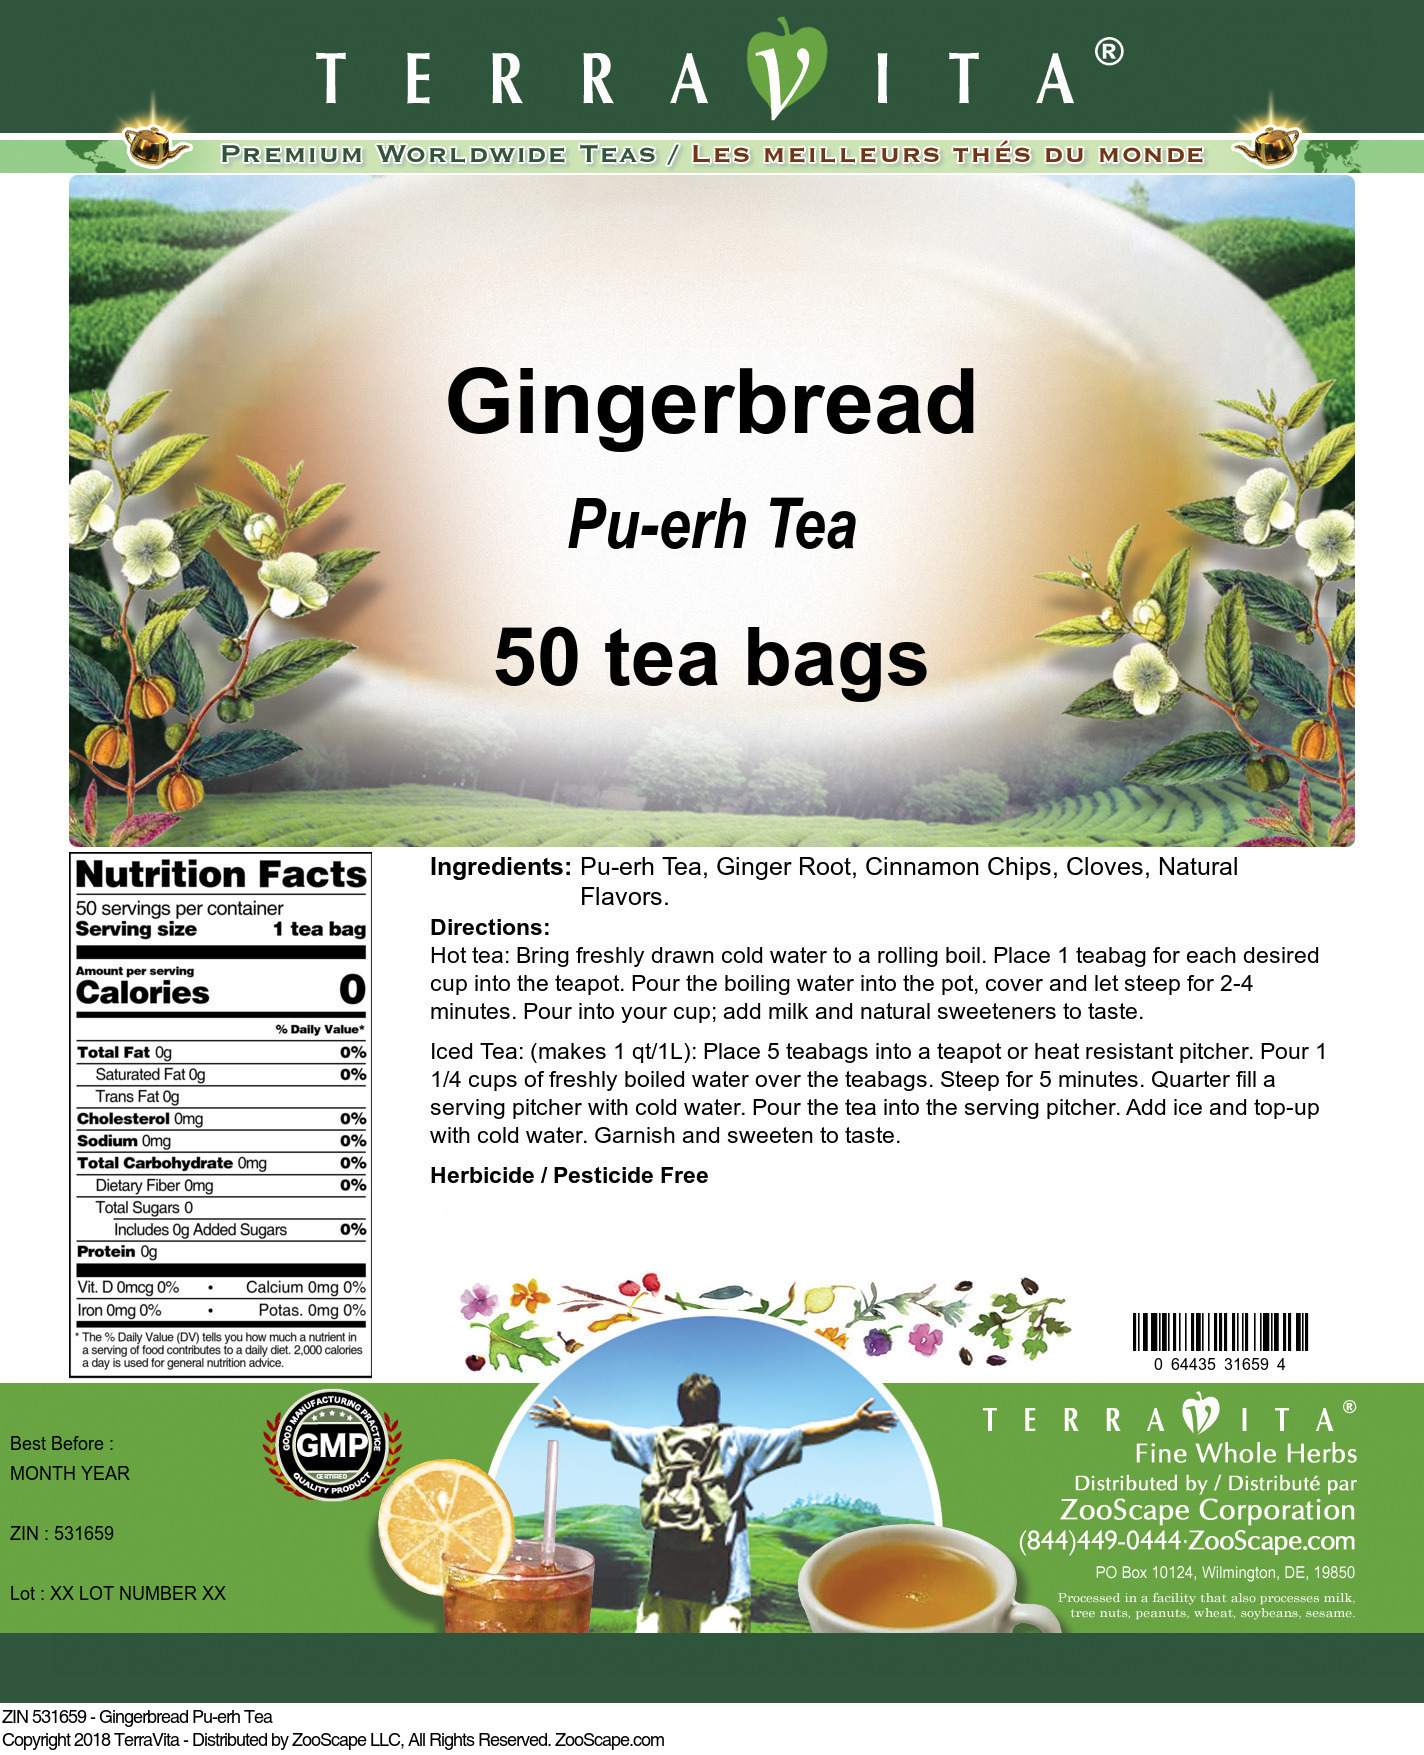 Gingerbread Pu-erh Tea - Label